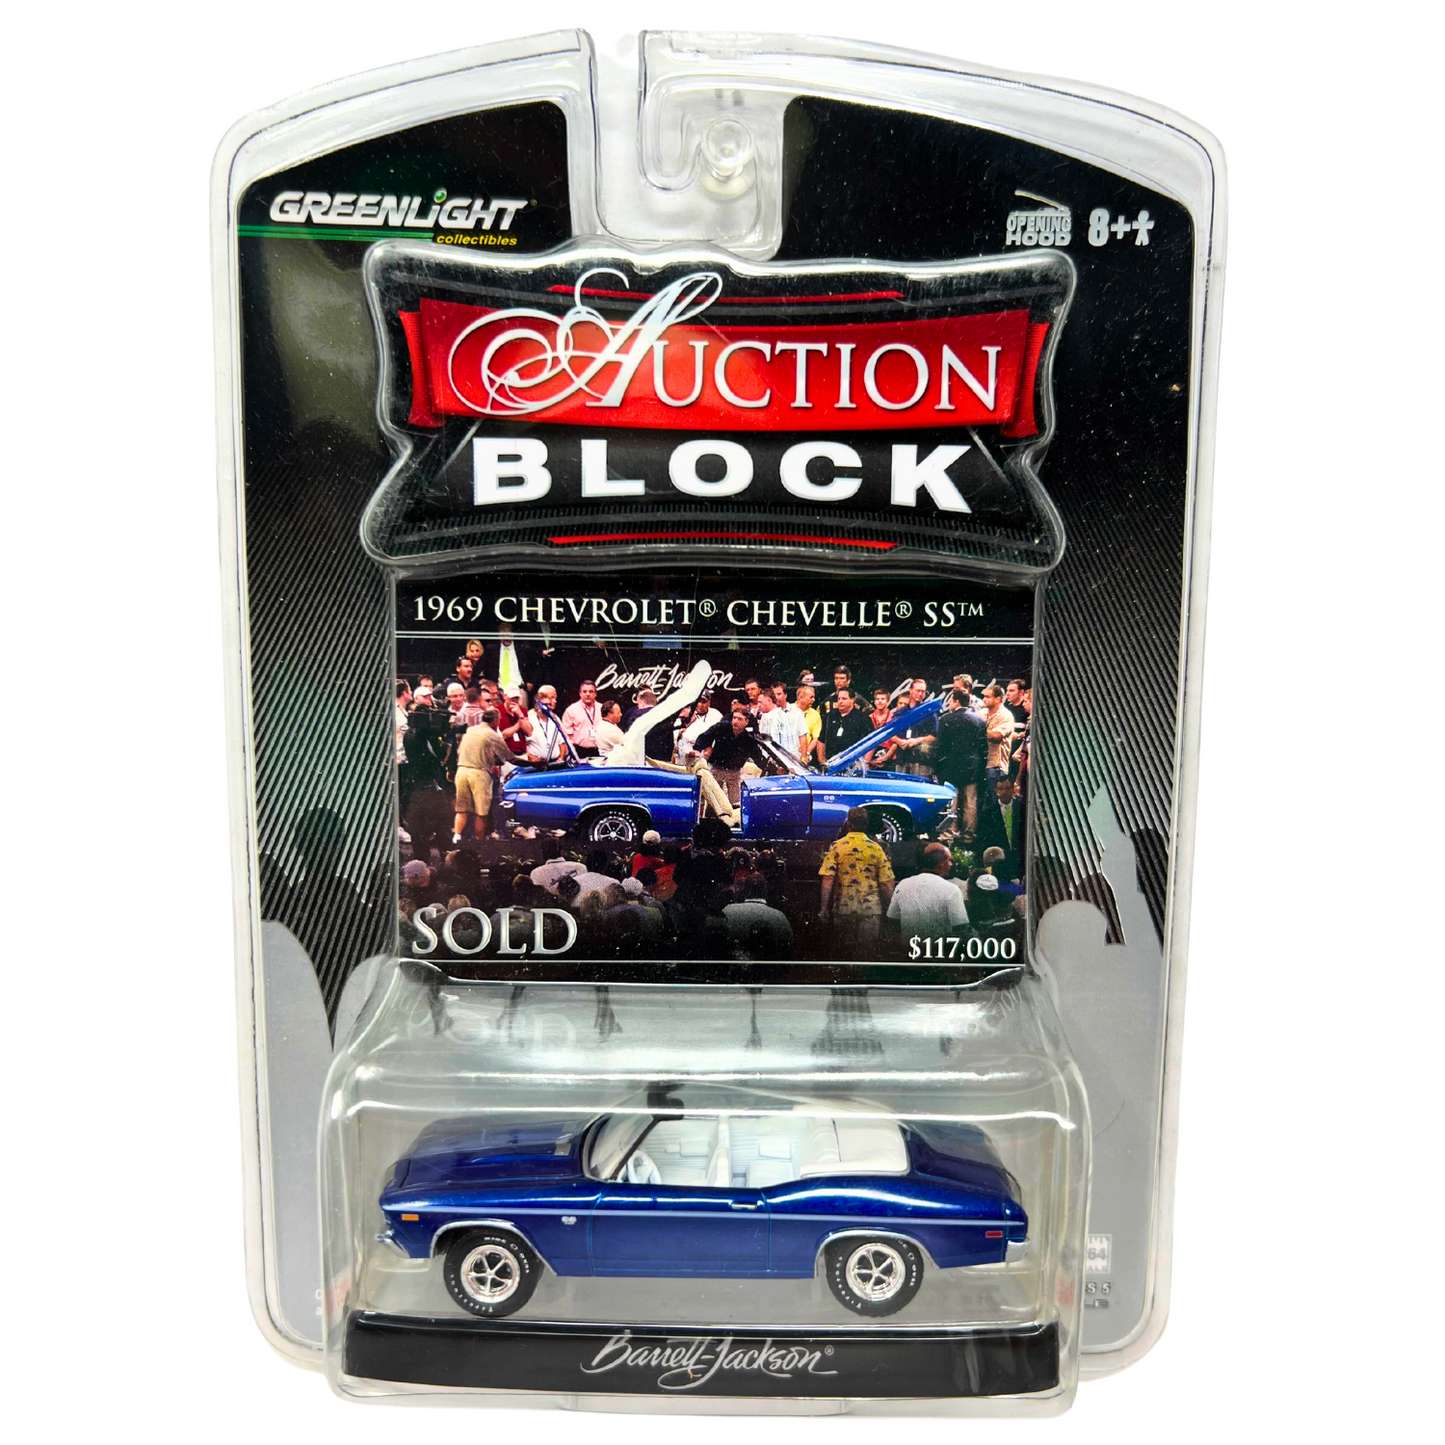 Greenlight Barrett Jackson Auction Block 1969 Chevrolet Chevelle SS 1:64 Diecast